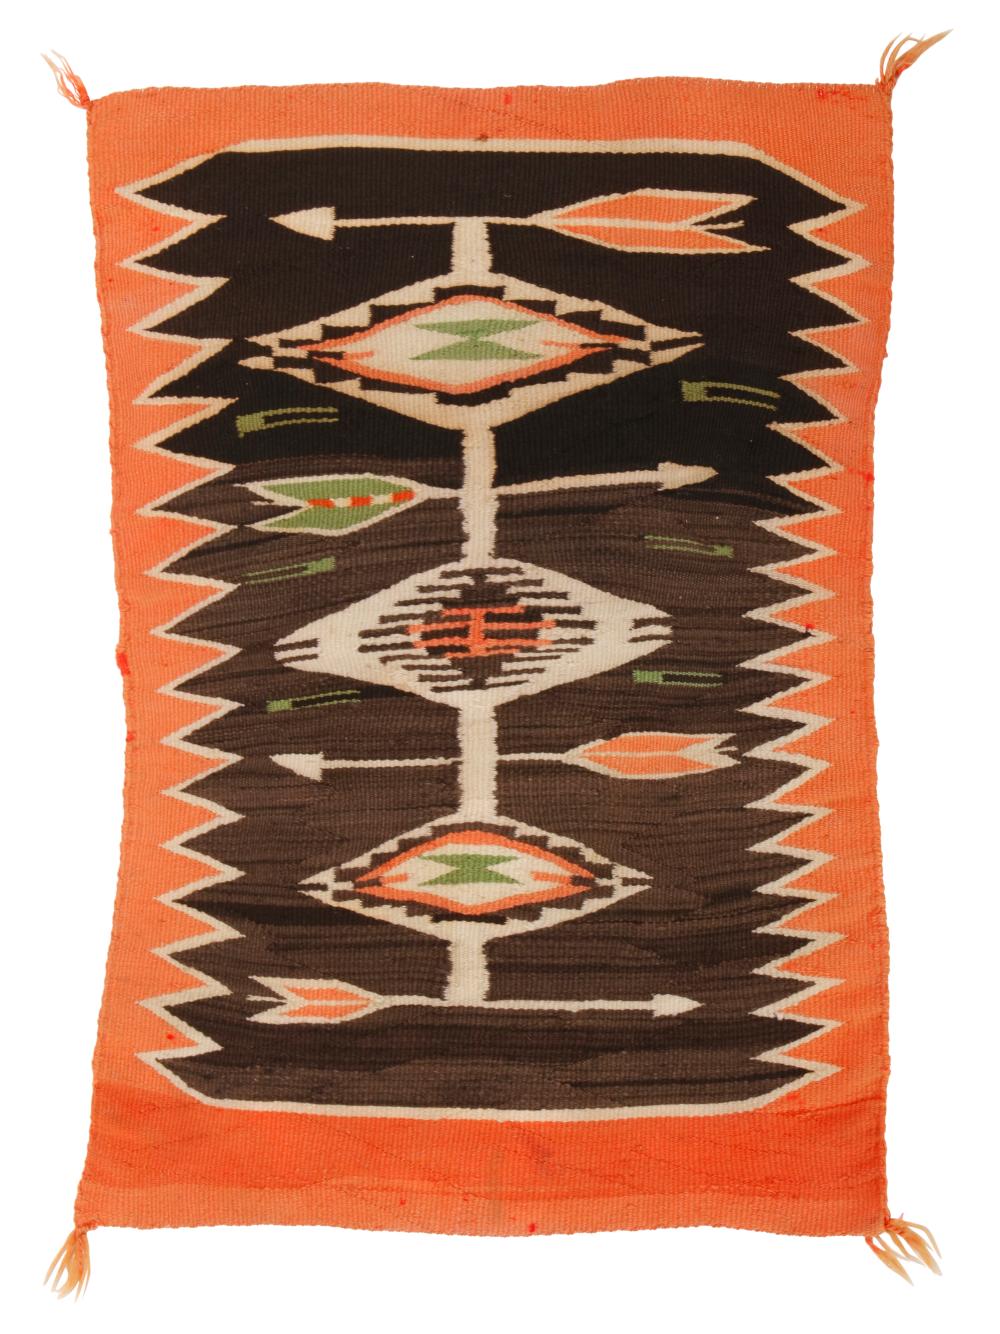 A NAVAJO TEXTILEA Navajo textile,